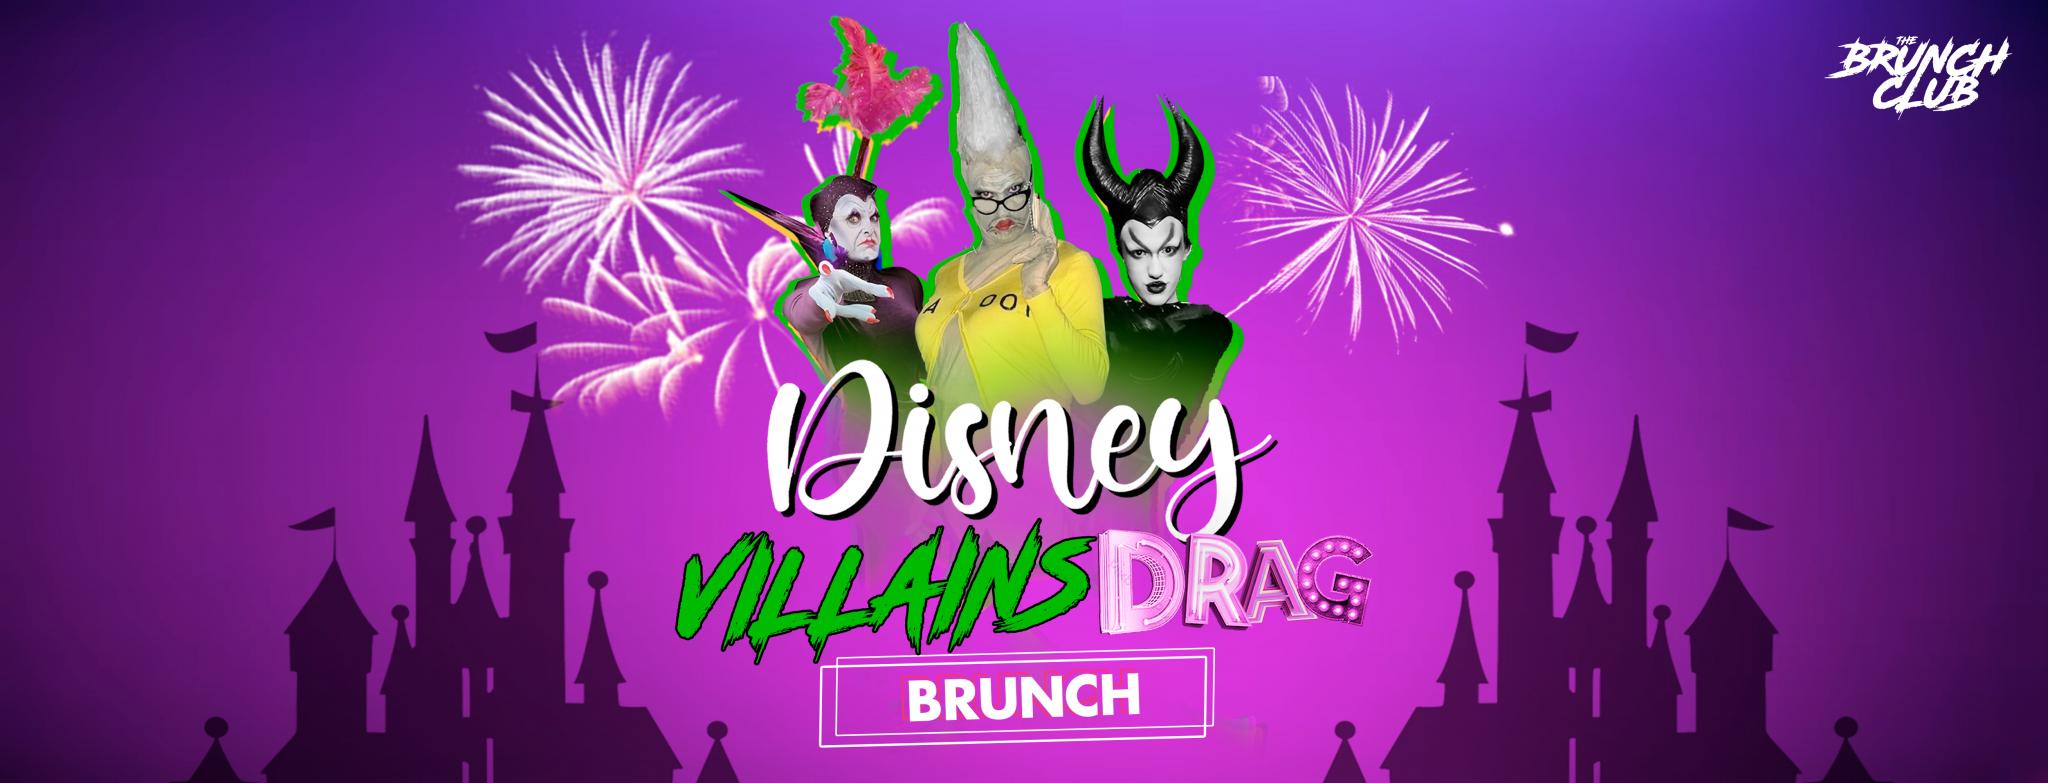 Disney Villains Drag Boozy Brunch - Edinburgh